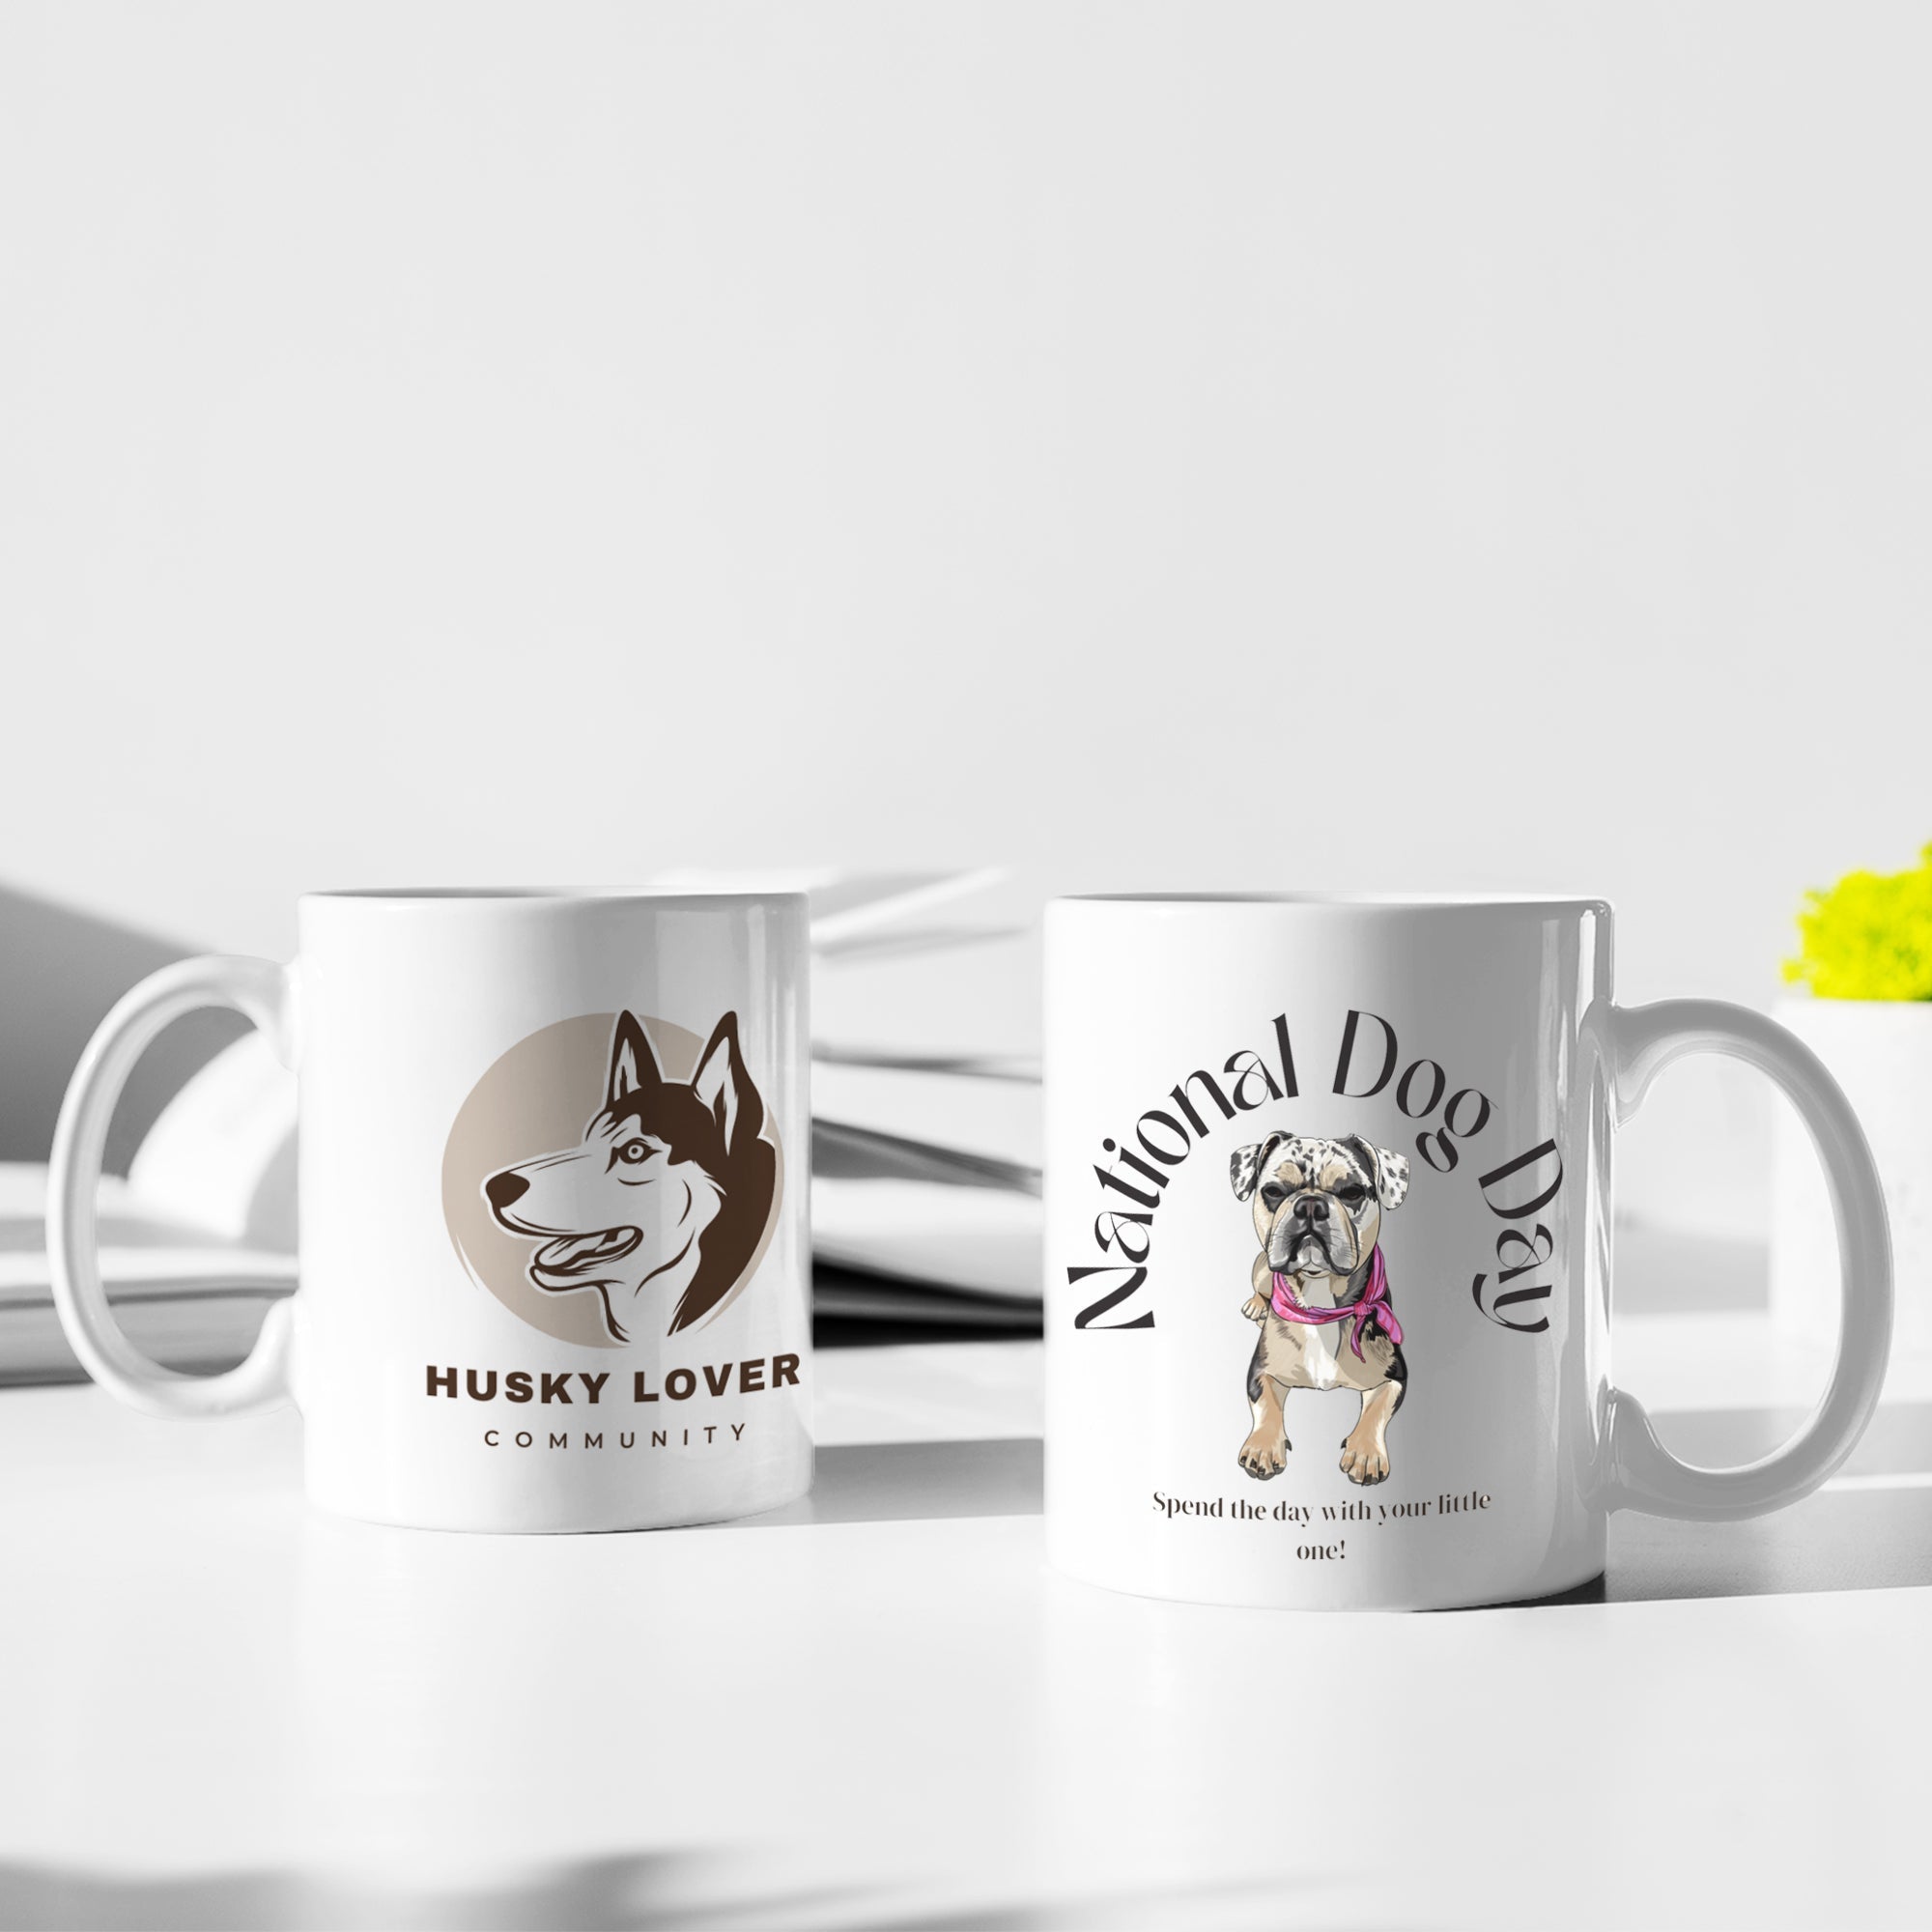 Custom Coffee Mugs - Bulk Order for Wedding gifts, Events &amp; Logos - cmzart